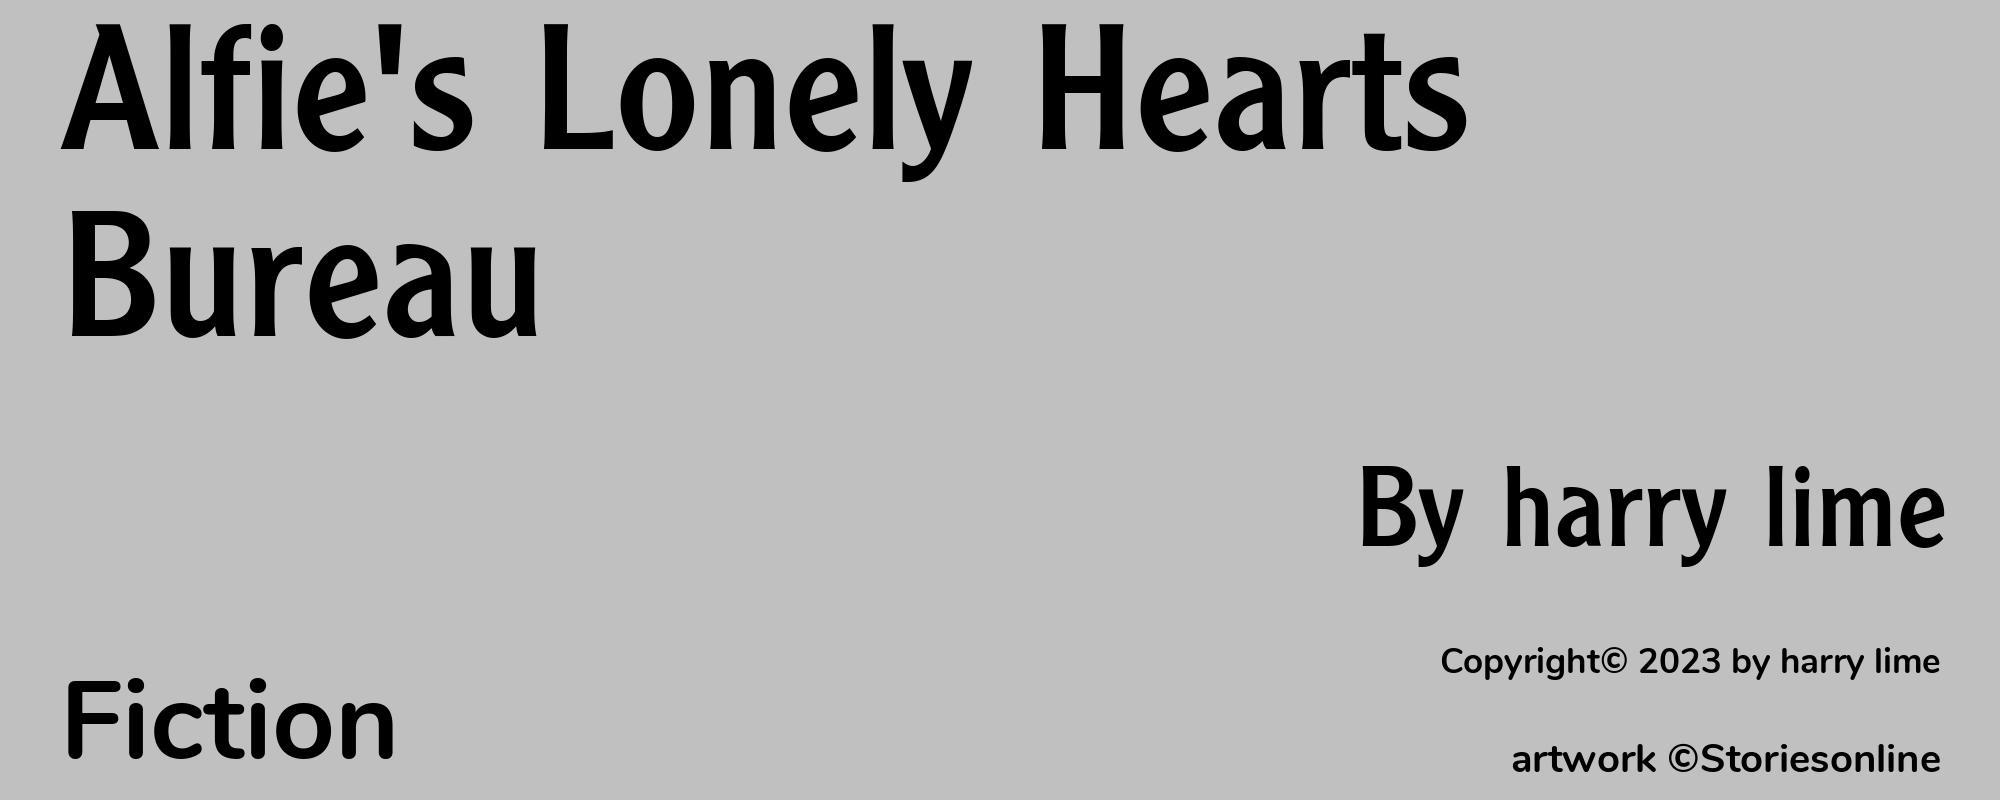 Alfie's Lonely Hearts Bureau - Cover